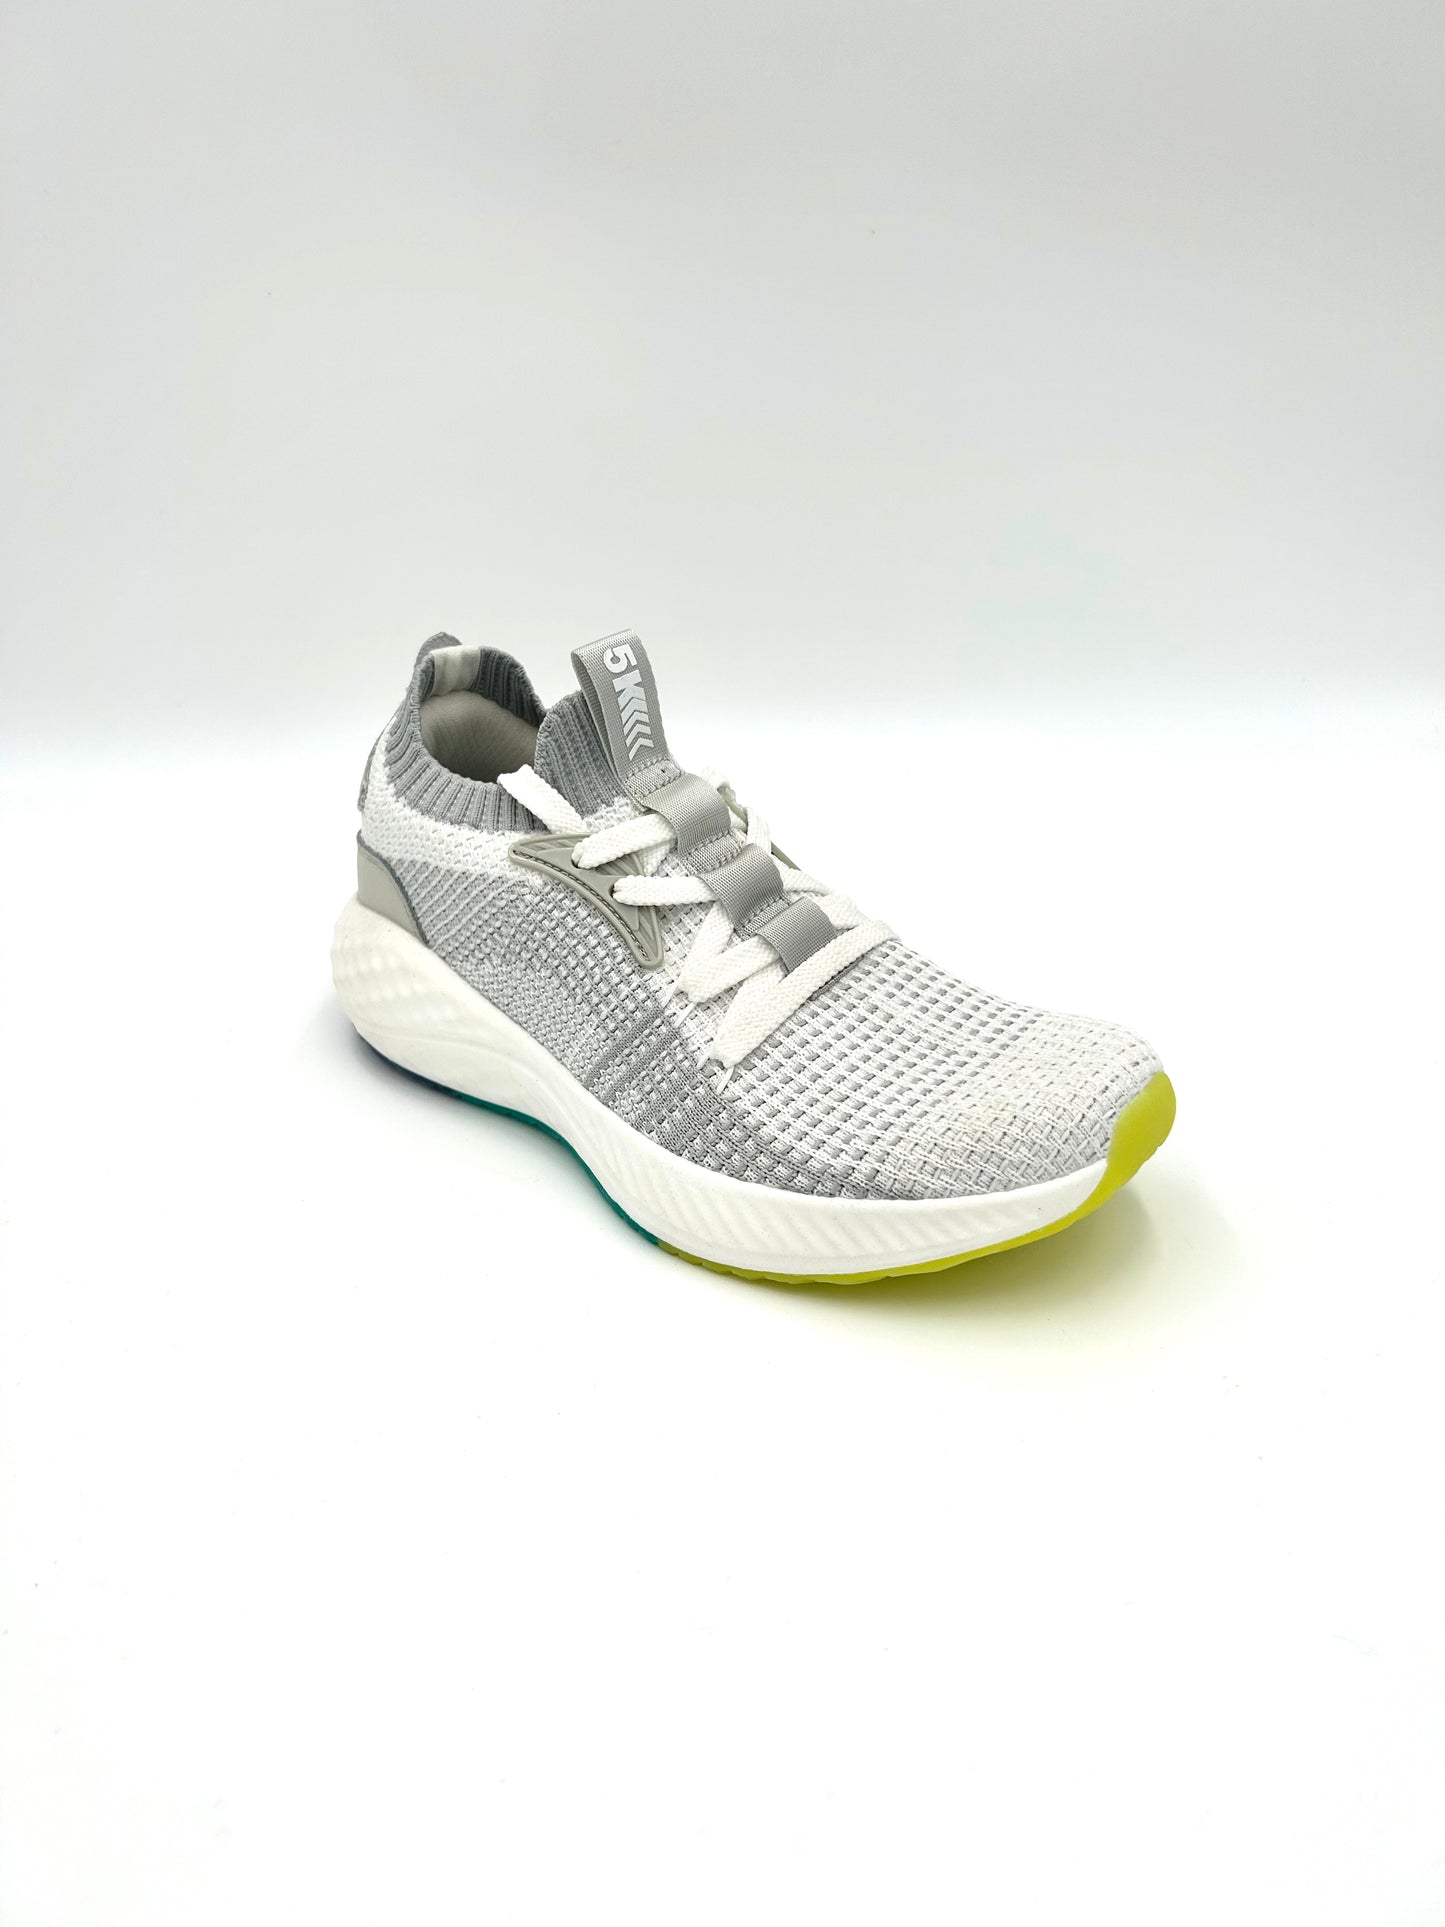 Etonic Sneakers calzino man- white and grey - Etonic